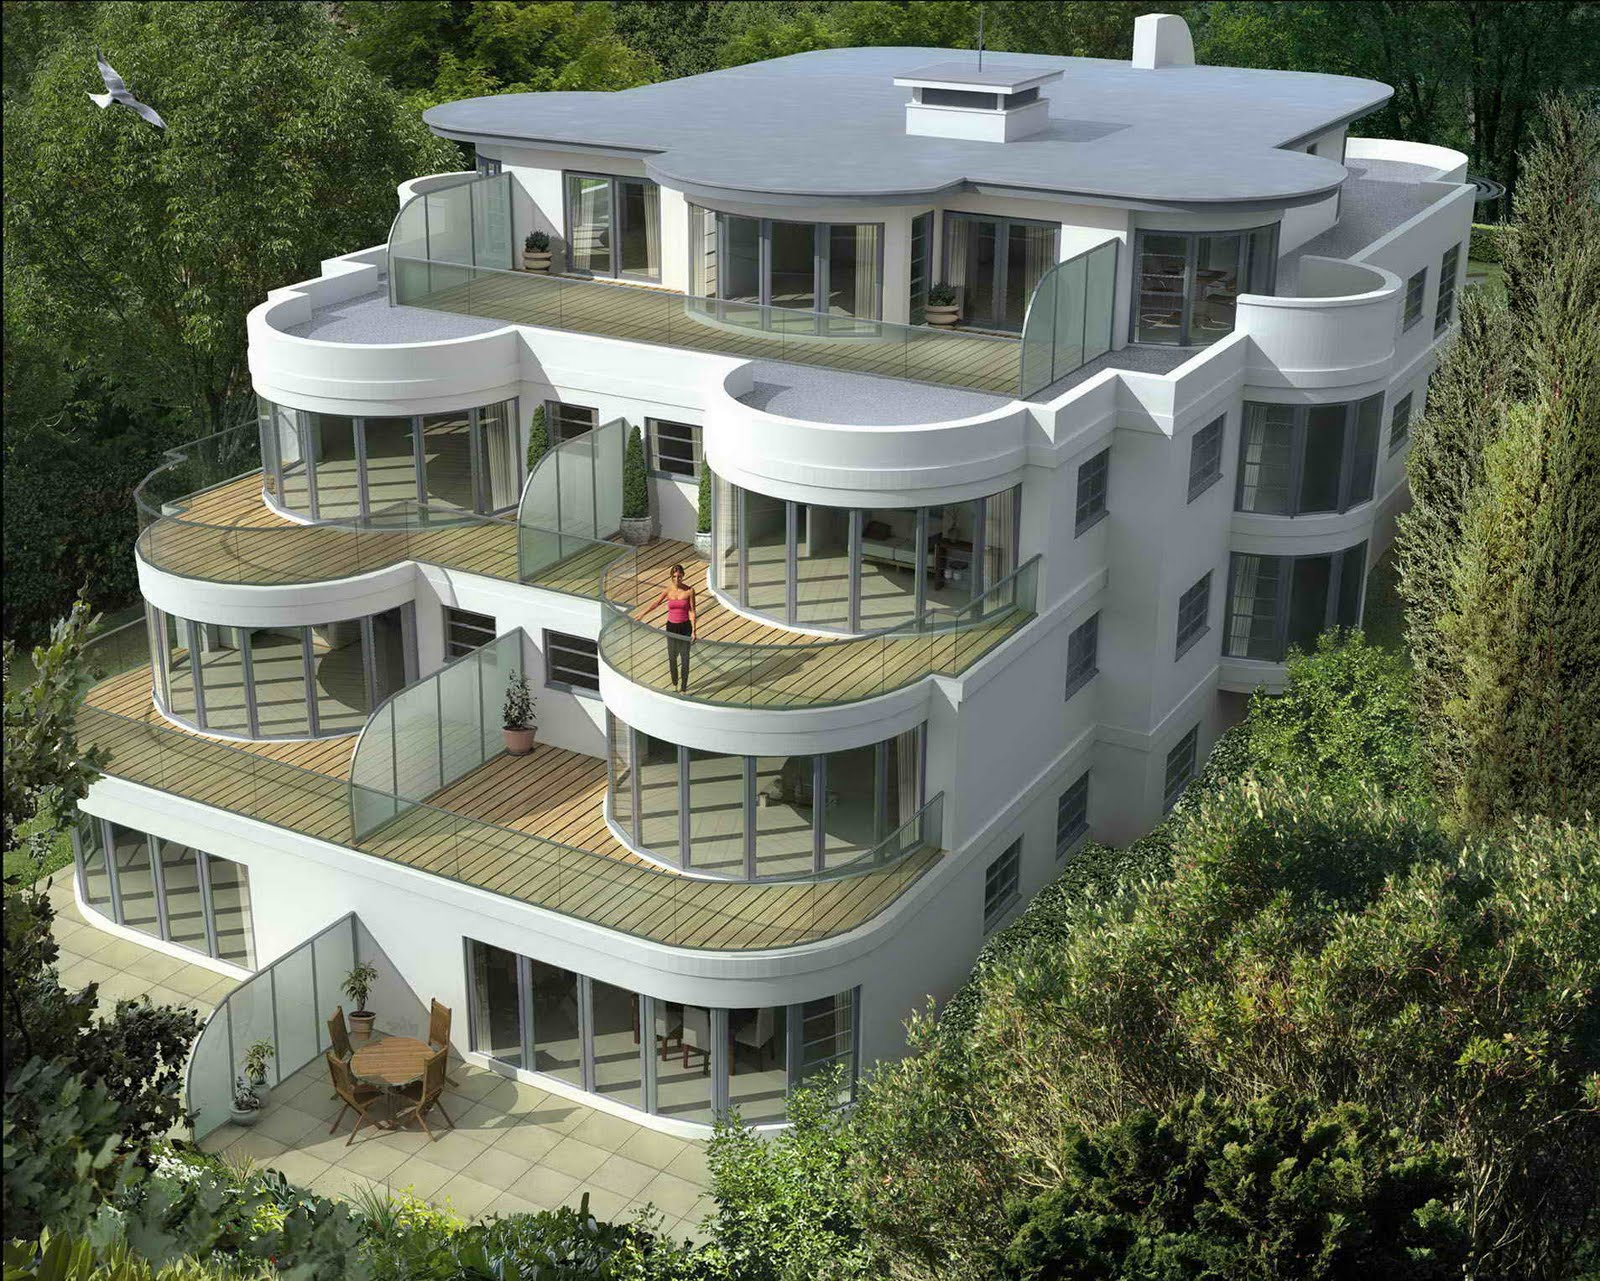 Best Home Design Software - Architectural Home Designer